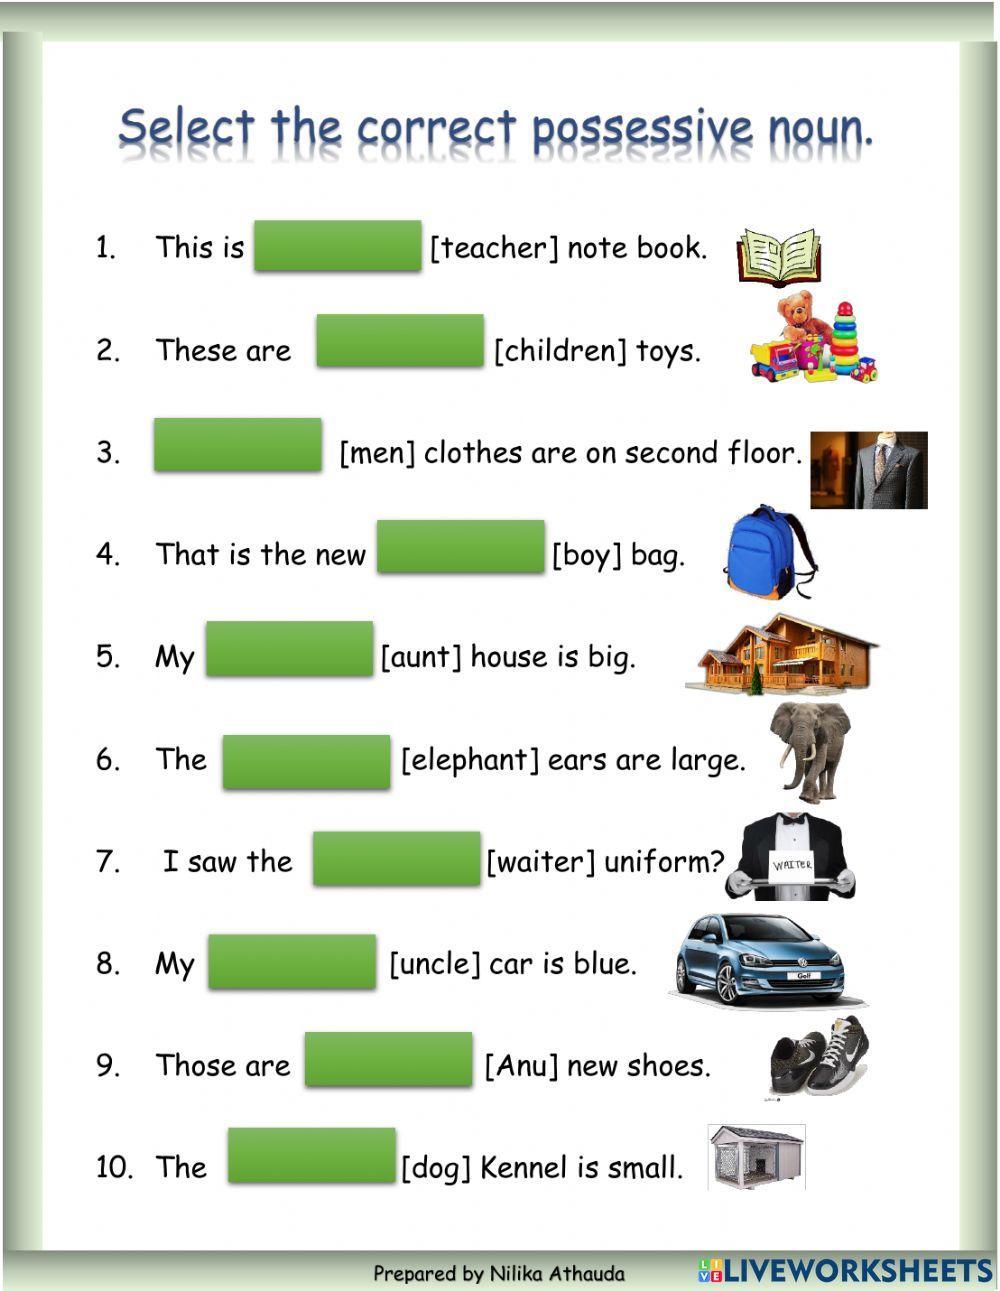 Possessive nouns interactive worksheet for Grade 4 | Live Worksheets